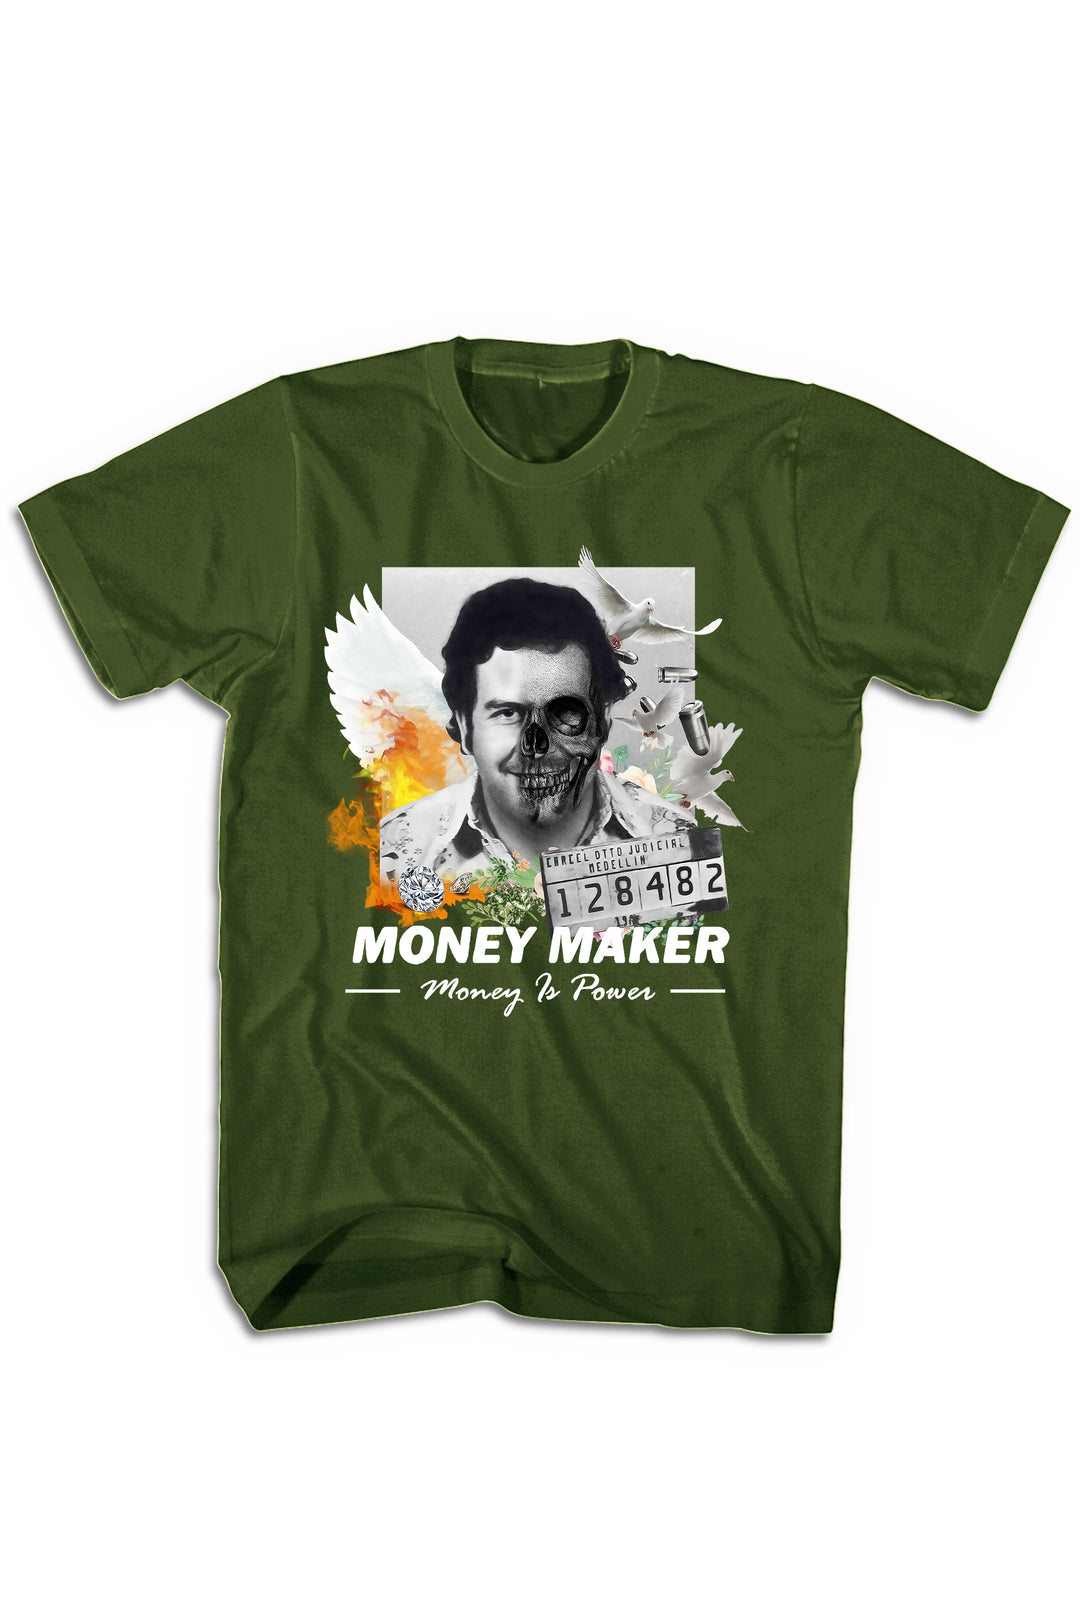 Official Money Maker Tee (Multi Color Logo) - Zamage